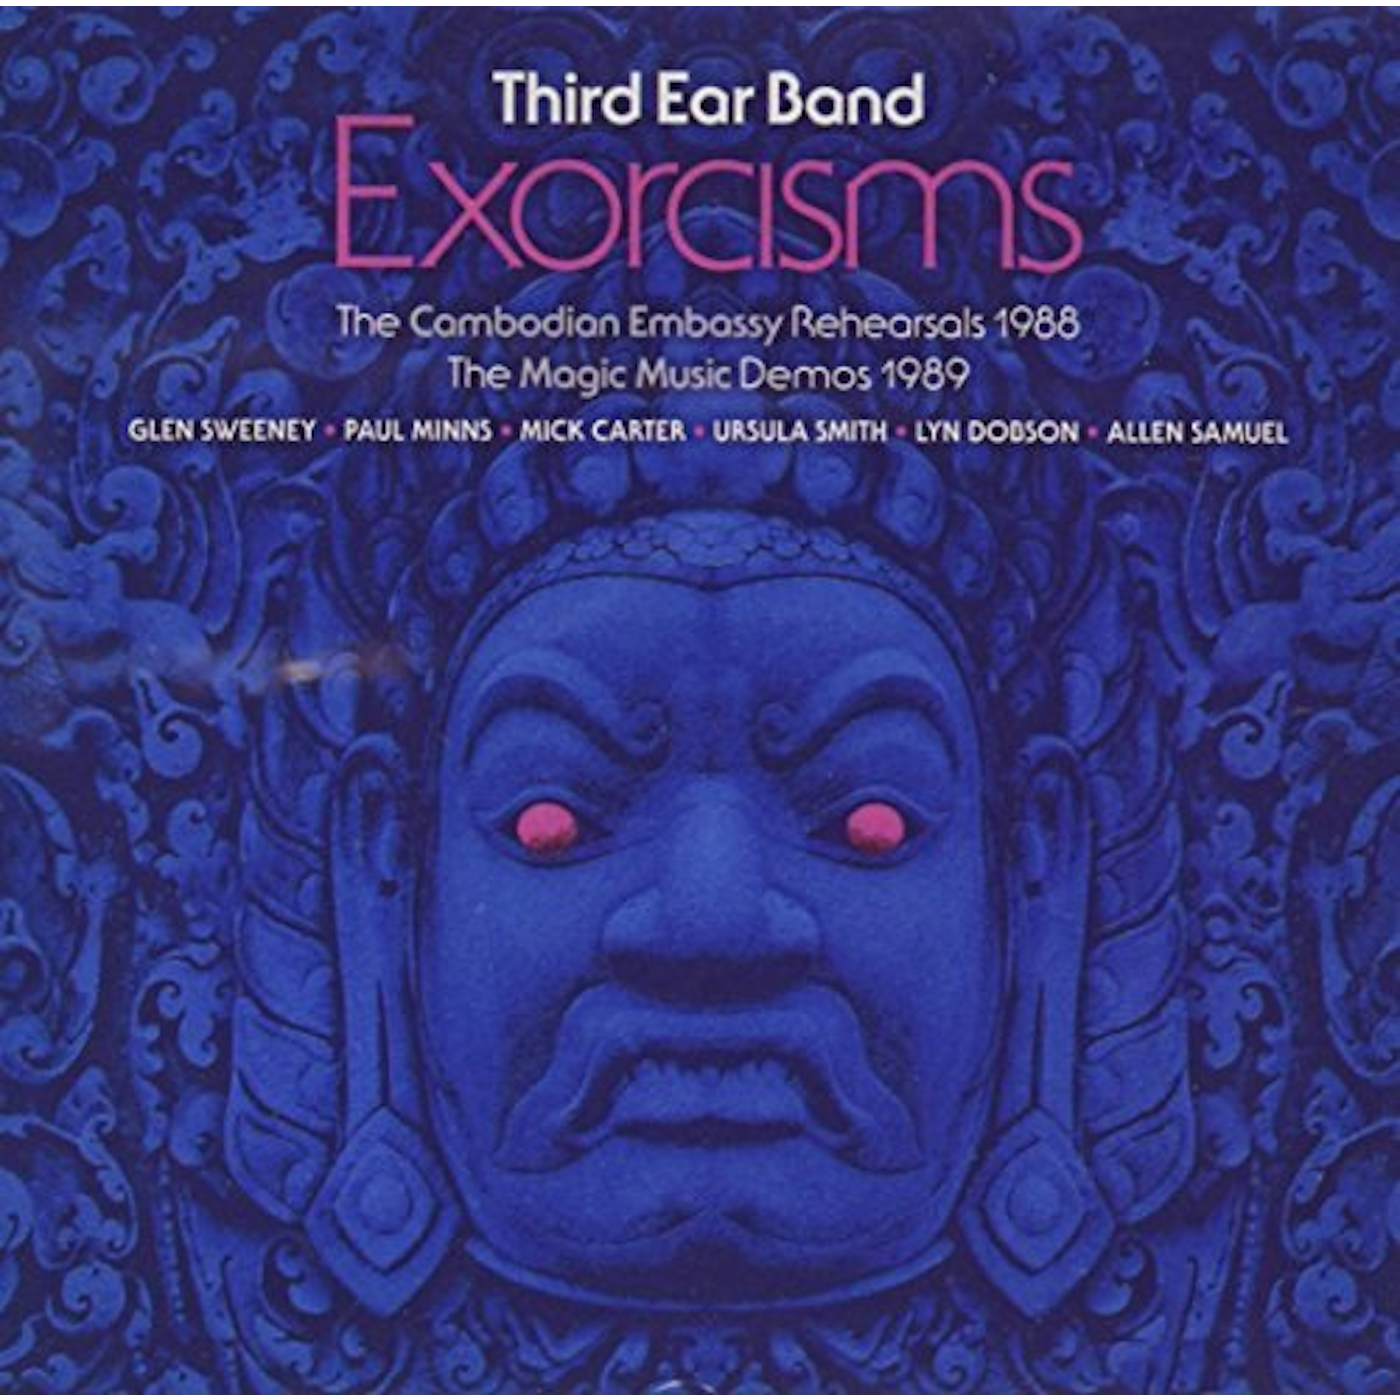 Third Ear Band EXORCISM CD